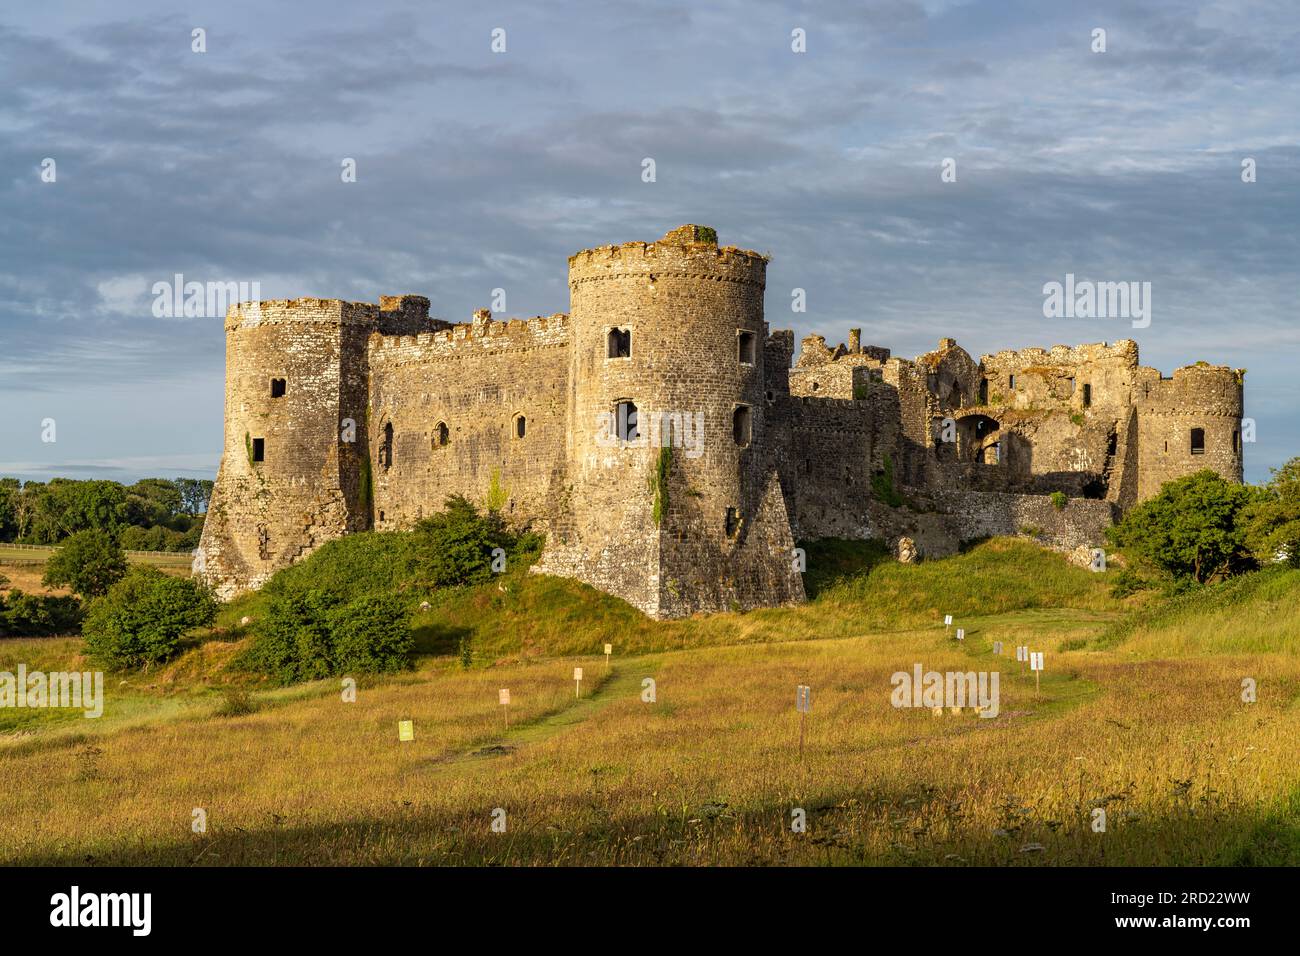 Burgruine Carew Castle, Pembrokeshire, Wales, Großbritannien, Europa | Carew Castle Ruin, Pembrokeshire, Wales, Vereinigtes Königreich Großbritannien, EUR Stockfoto